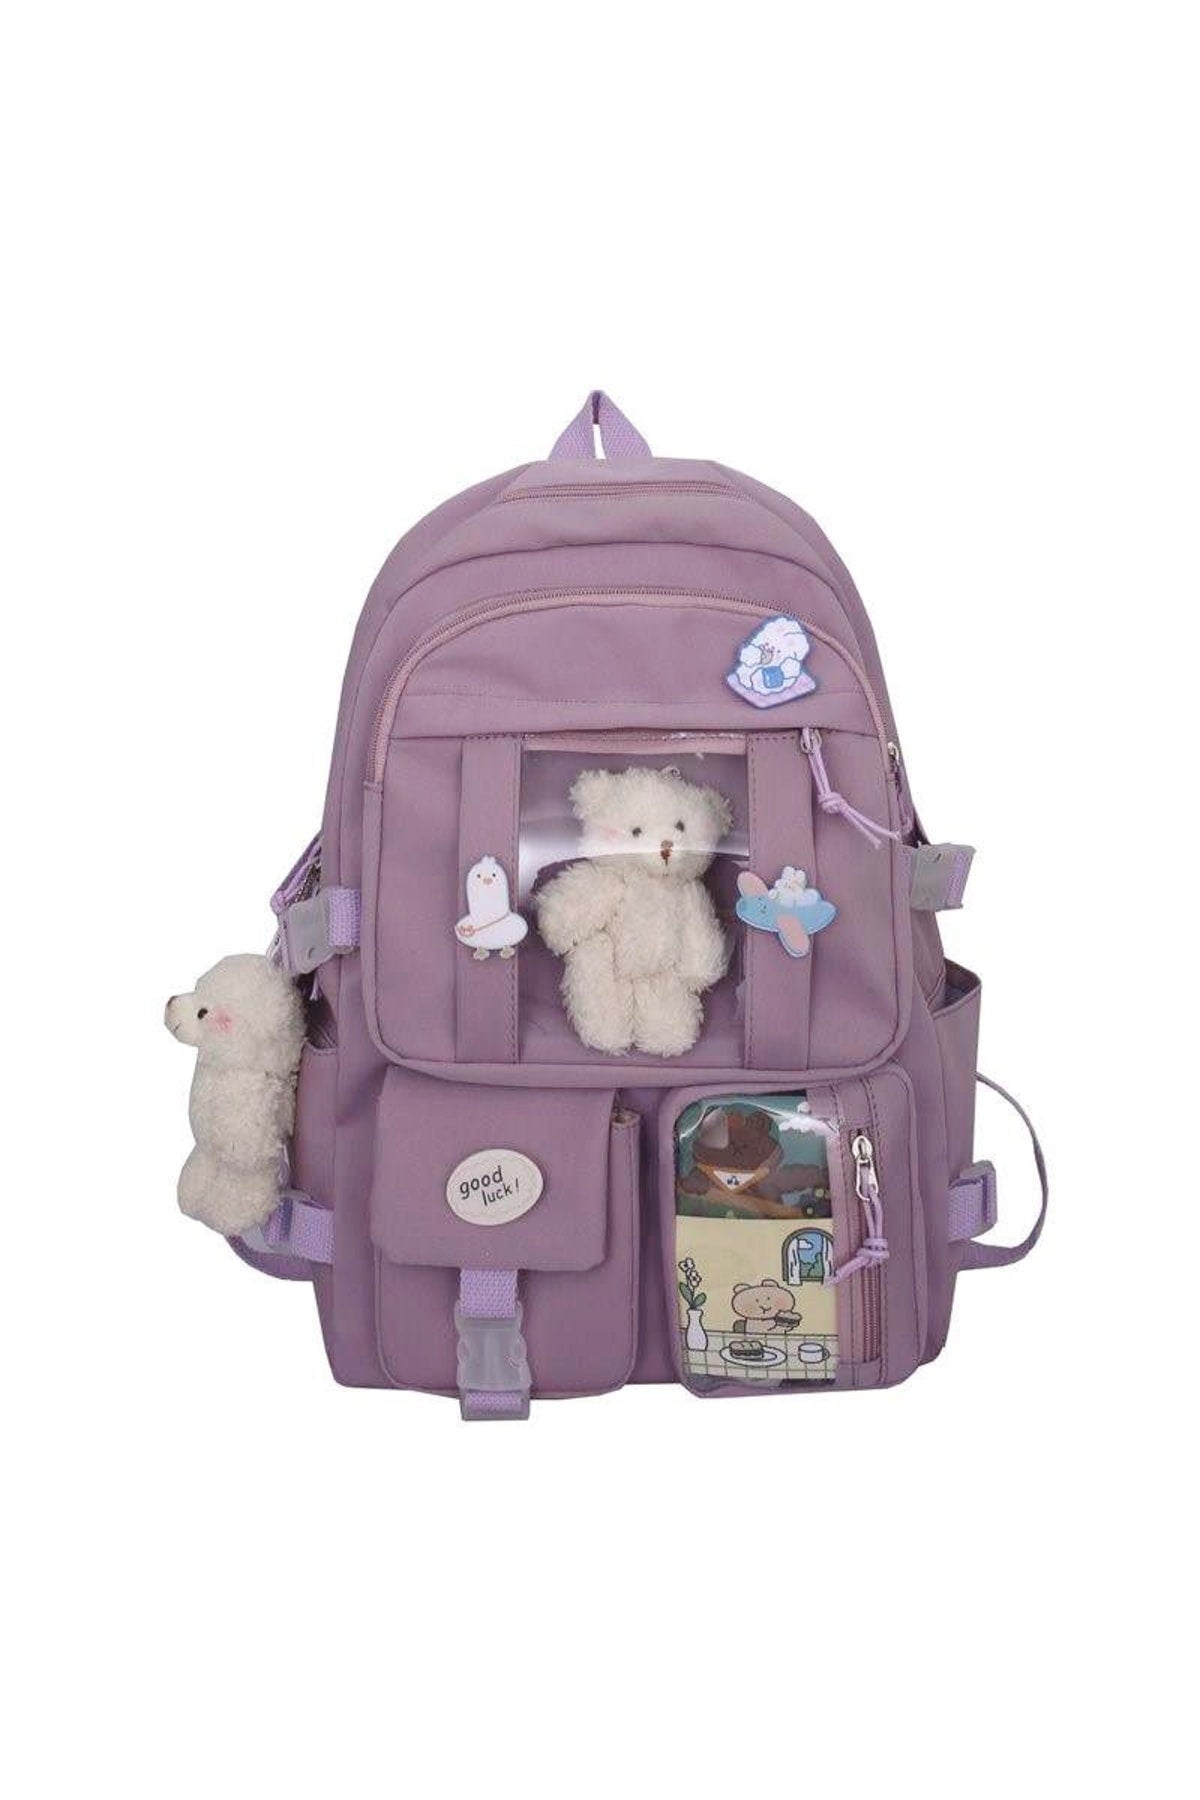 Design Bear, School Bag with Accessories, Korean Style